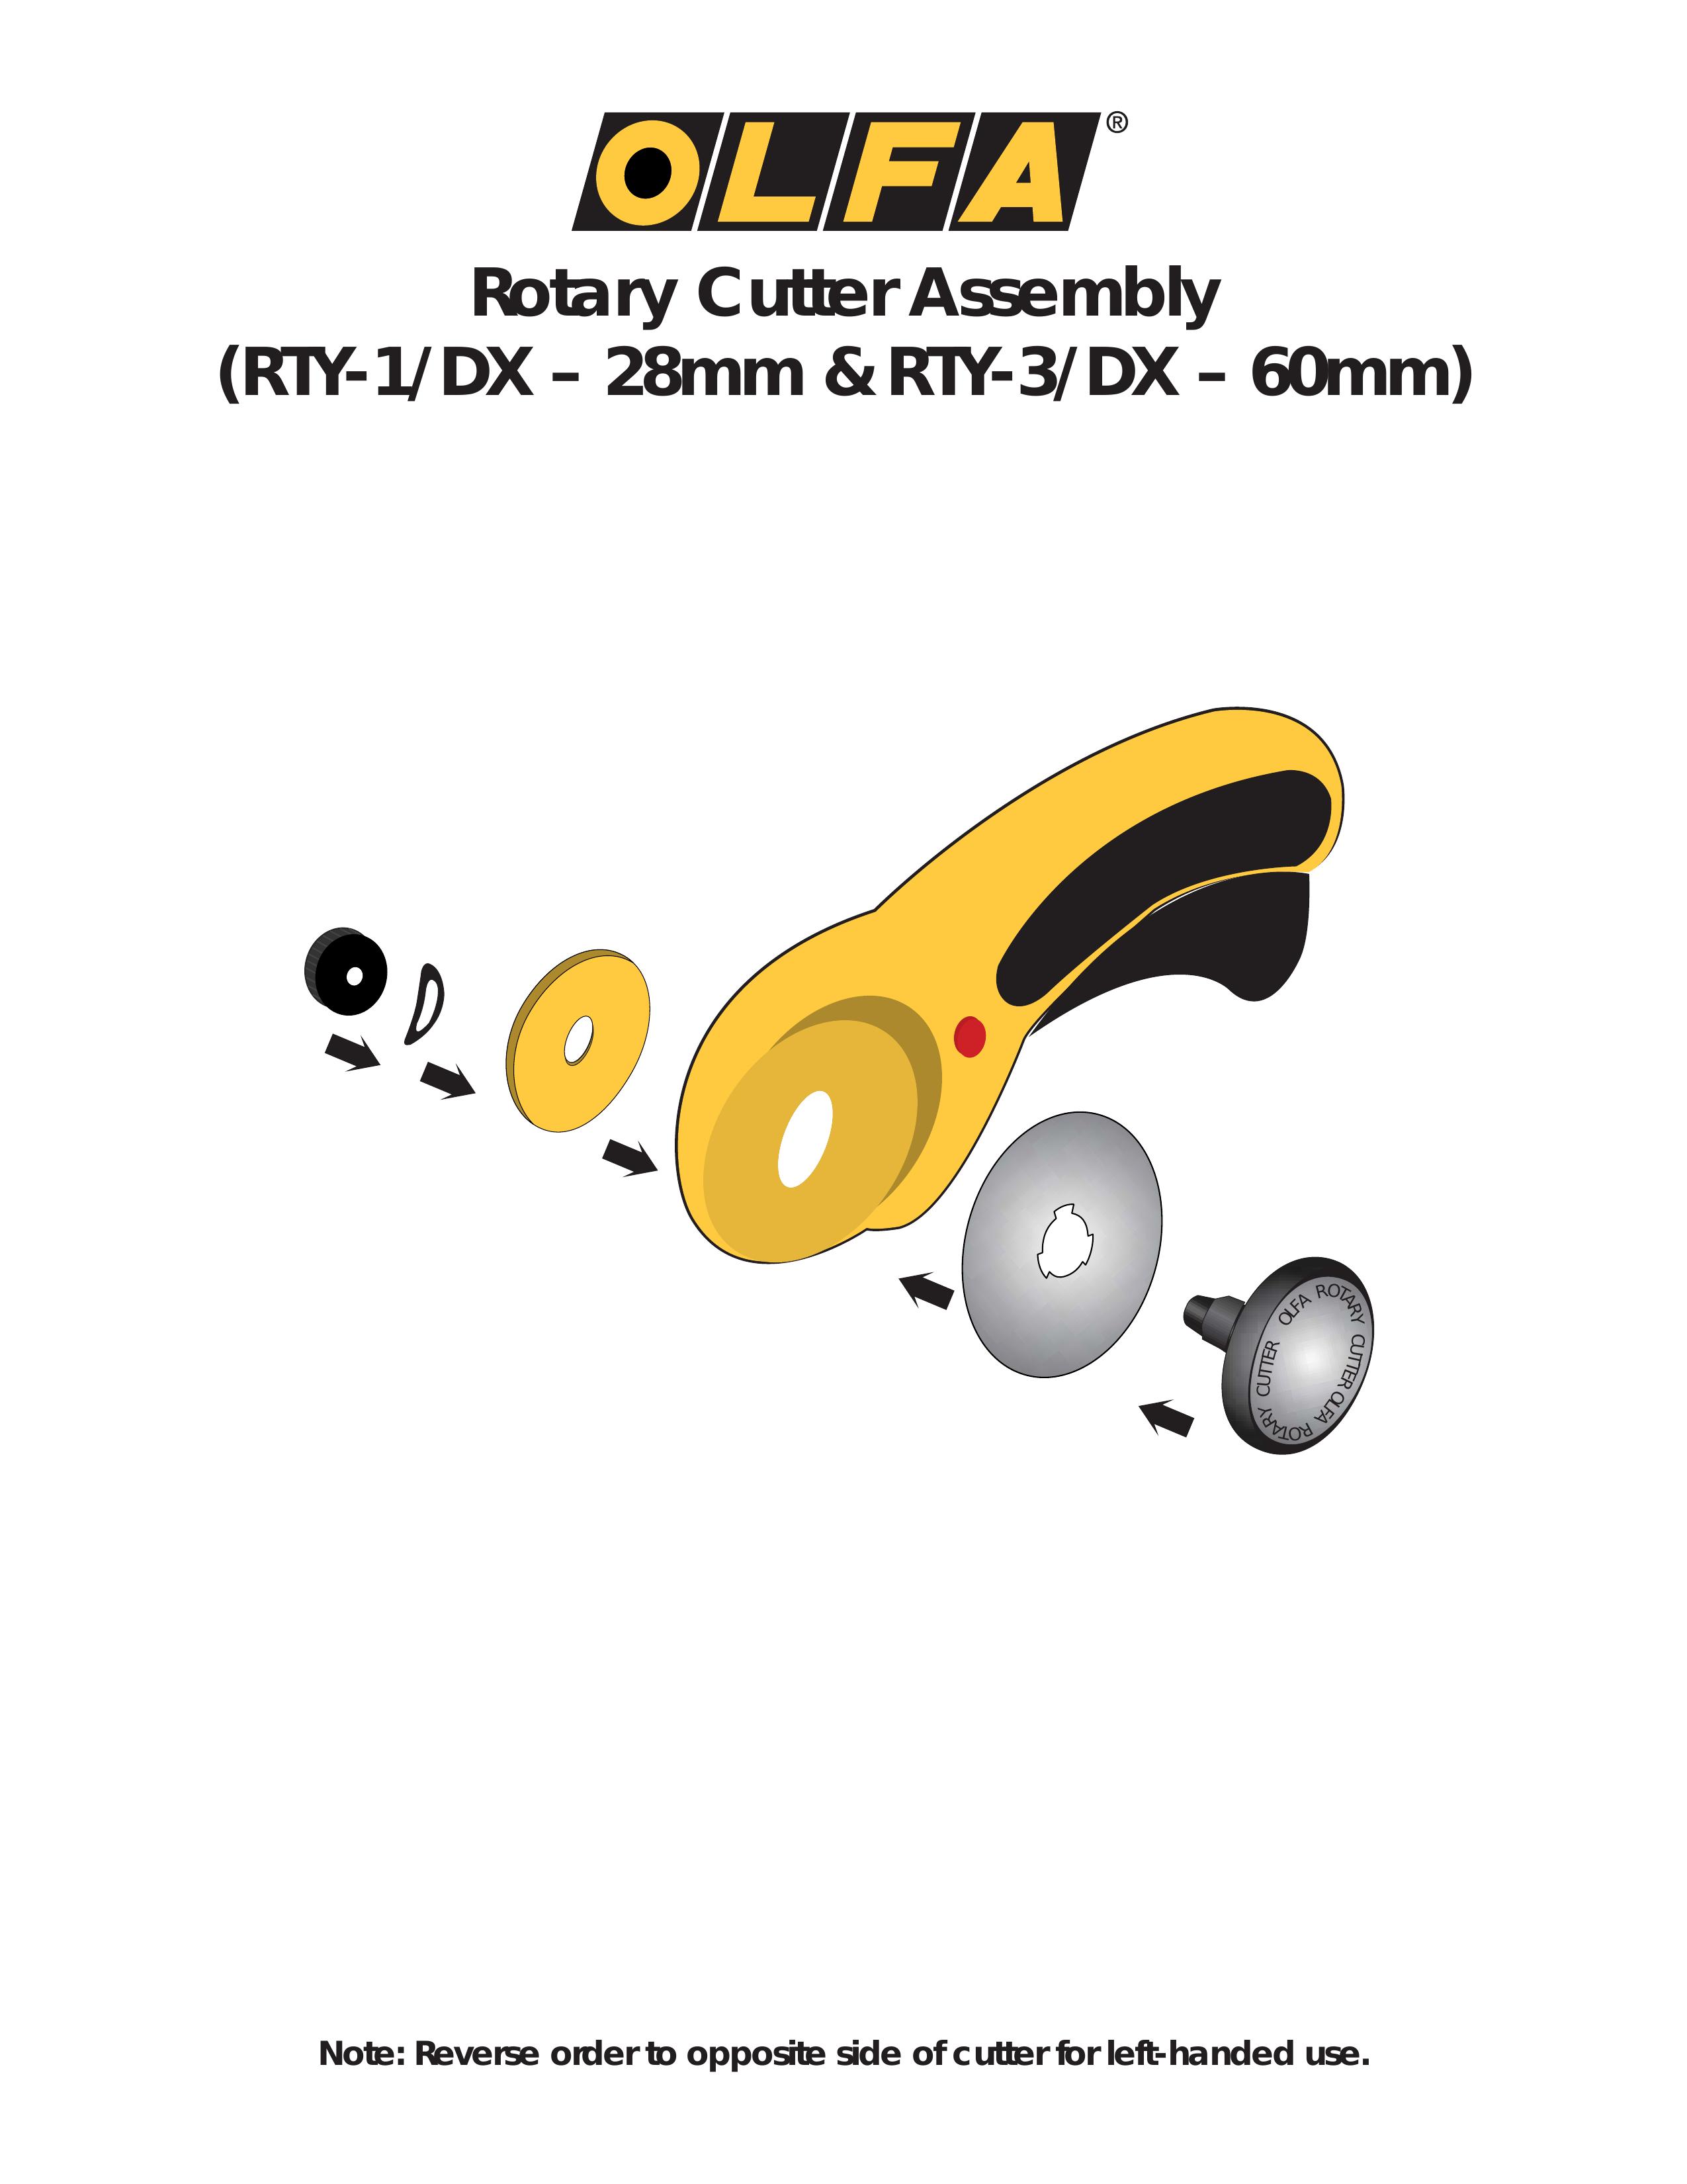 Olfa RTY-1/DX Brush Cutter User Manual